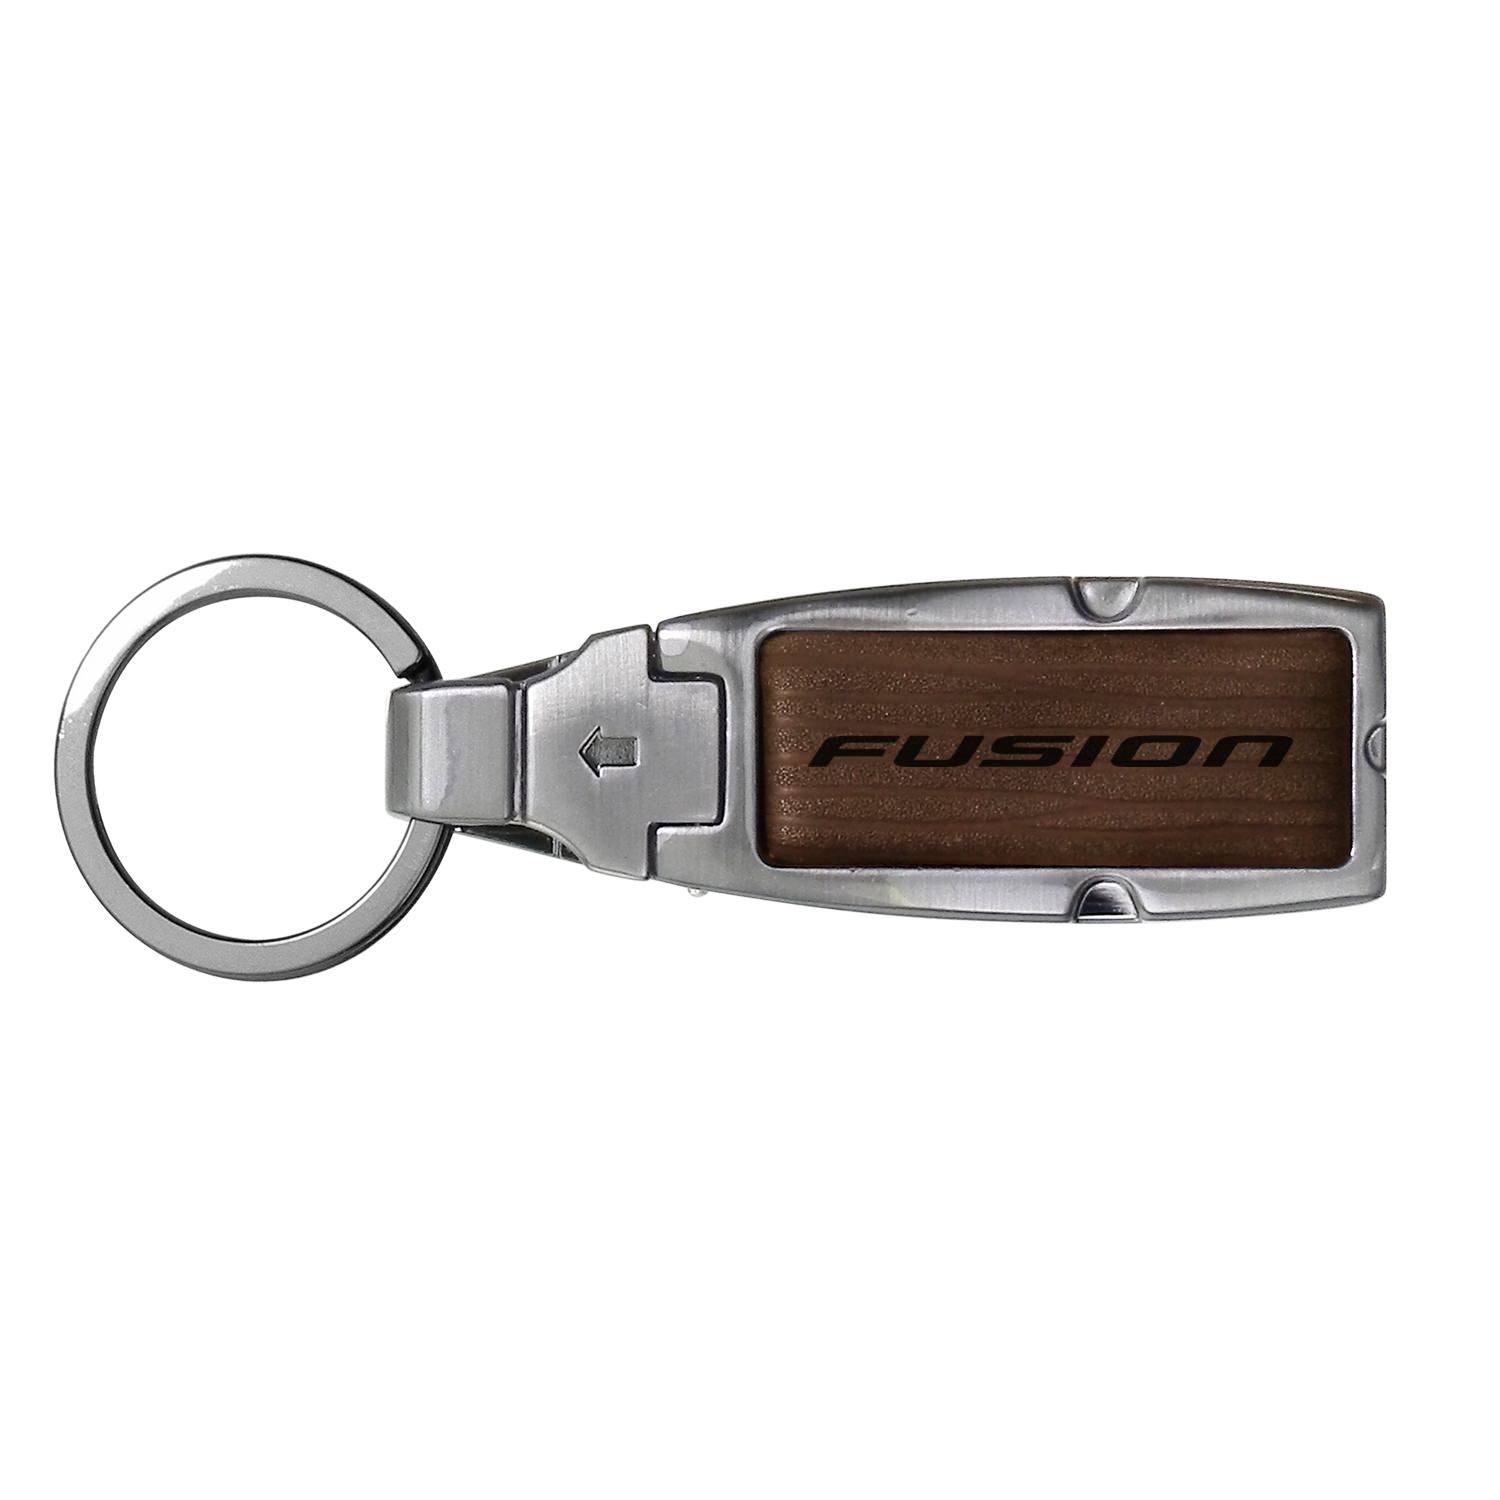 Ford,Fusion,Key Chain